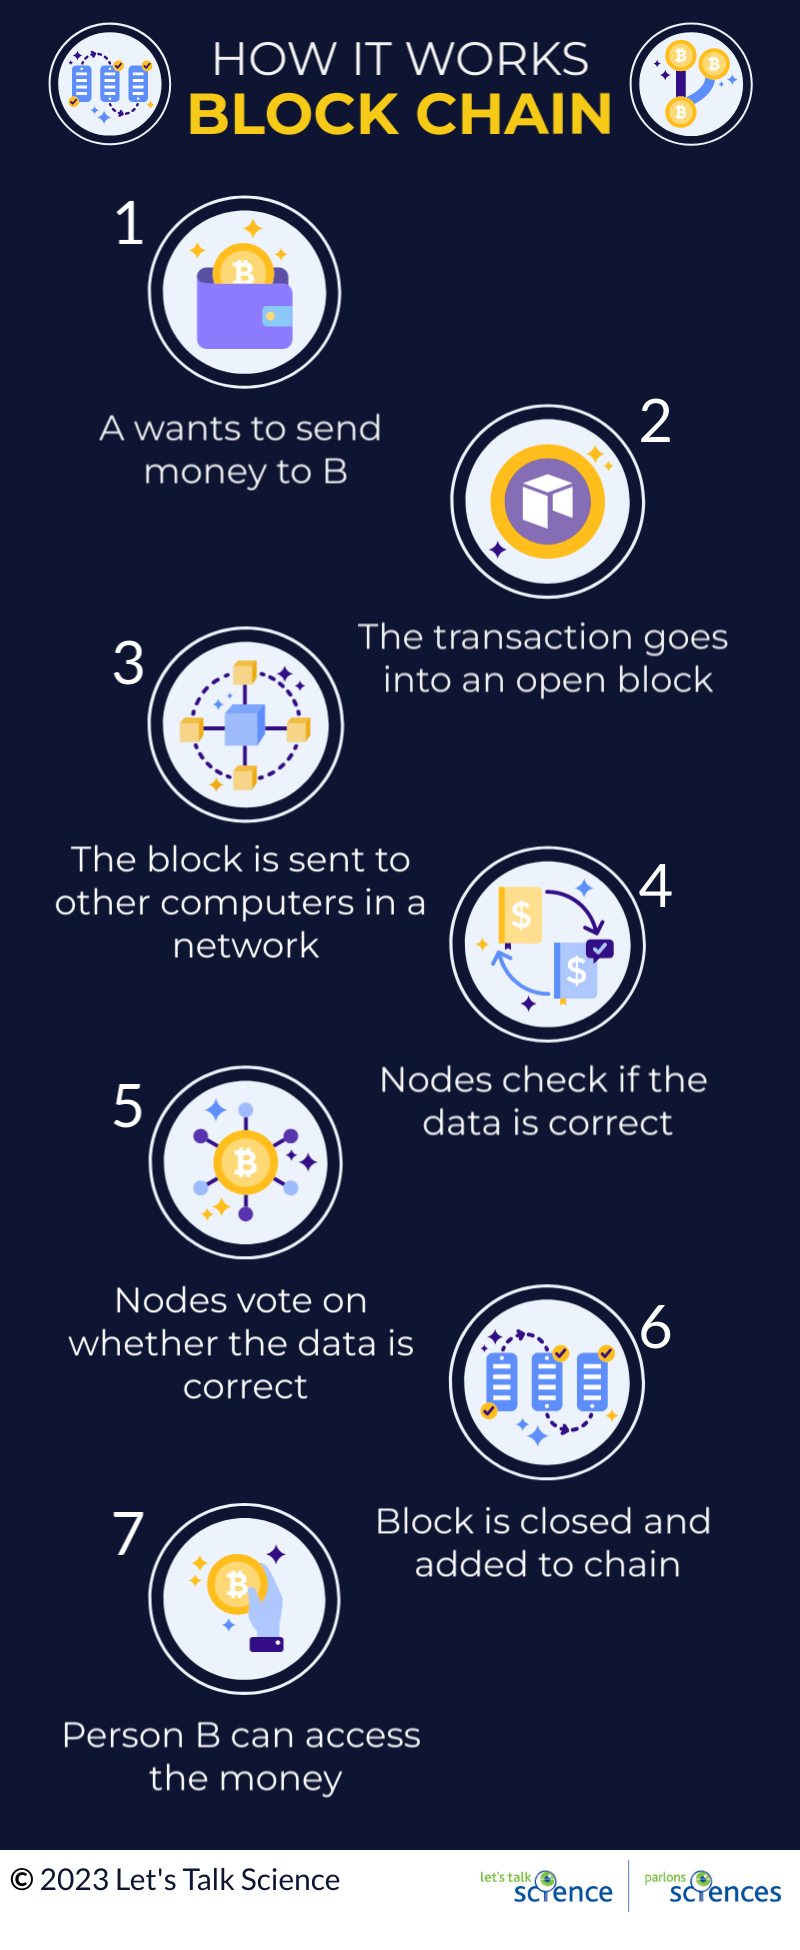 Shown is a colour infographic that explains how blockchain works.